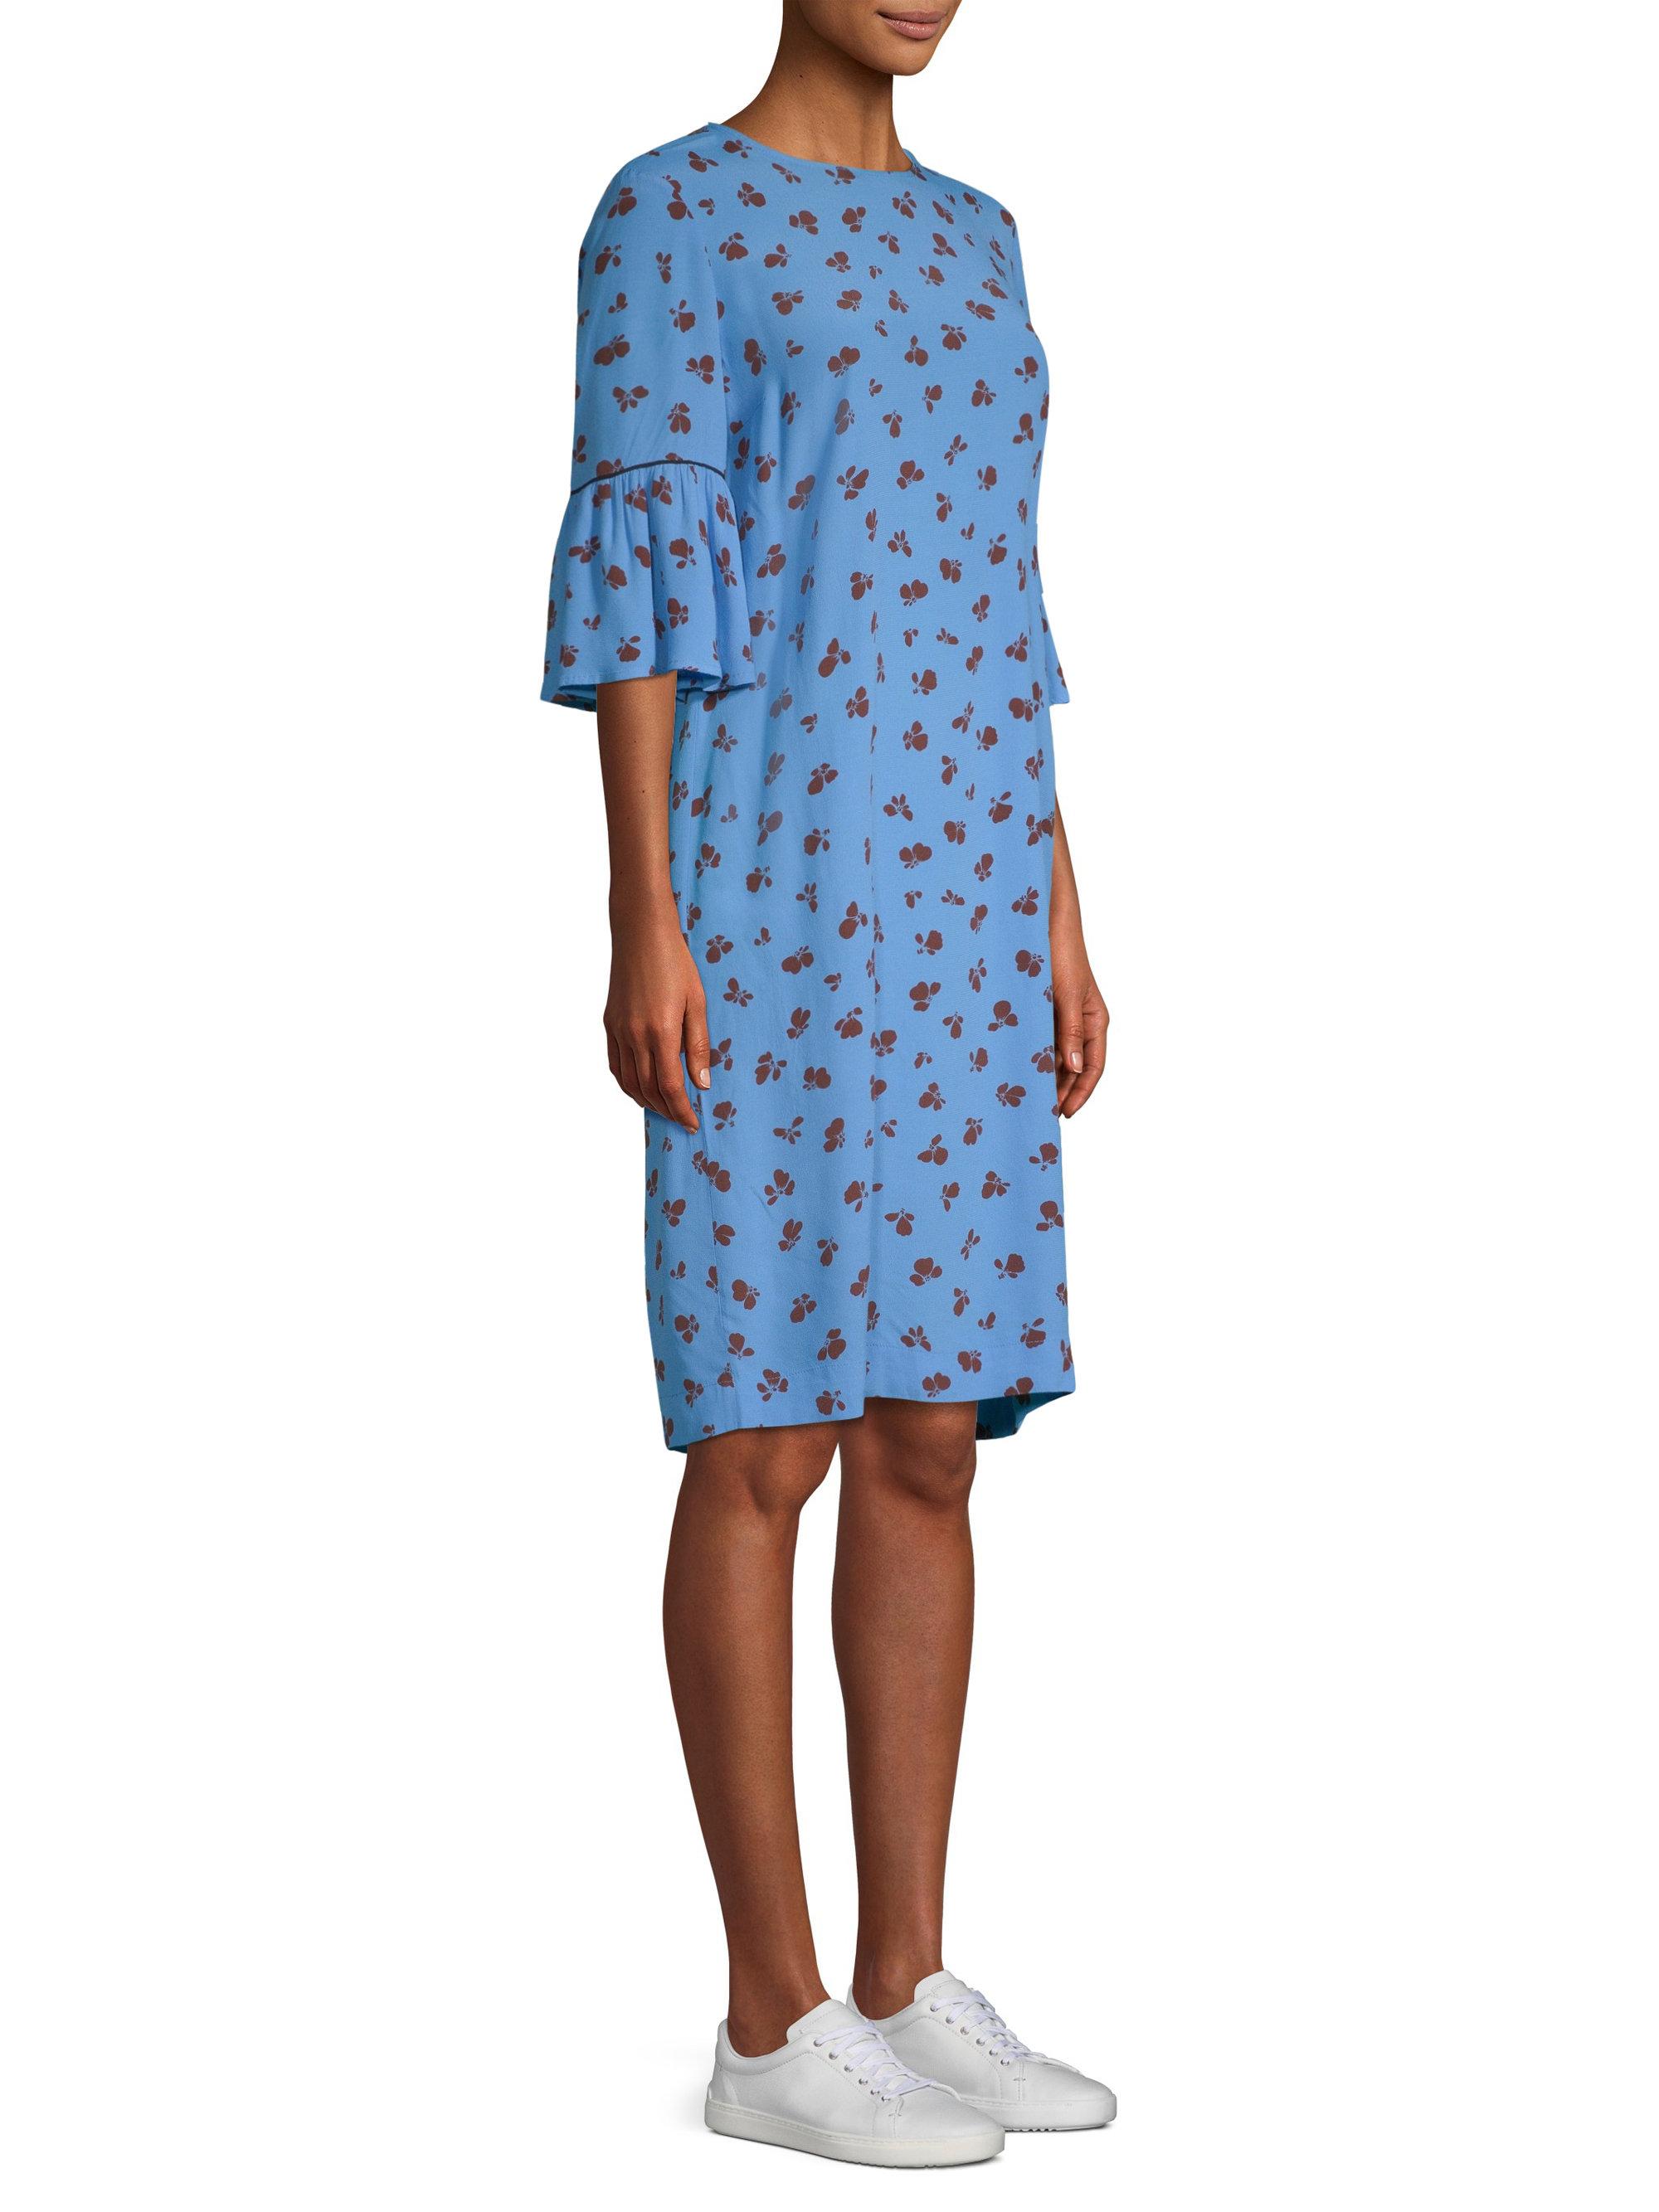 Ganni Synthetic Roseburg Crepe Dress in Blue - Lyst